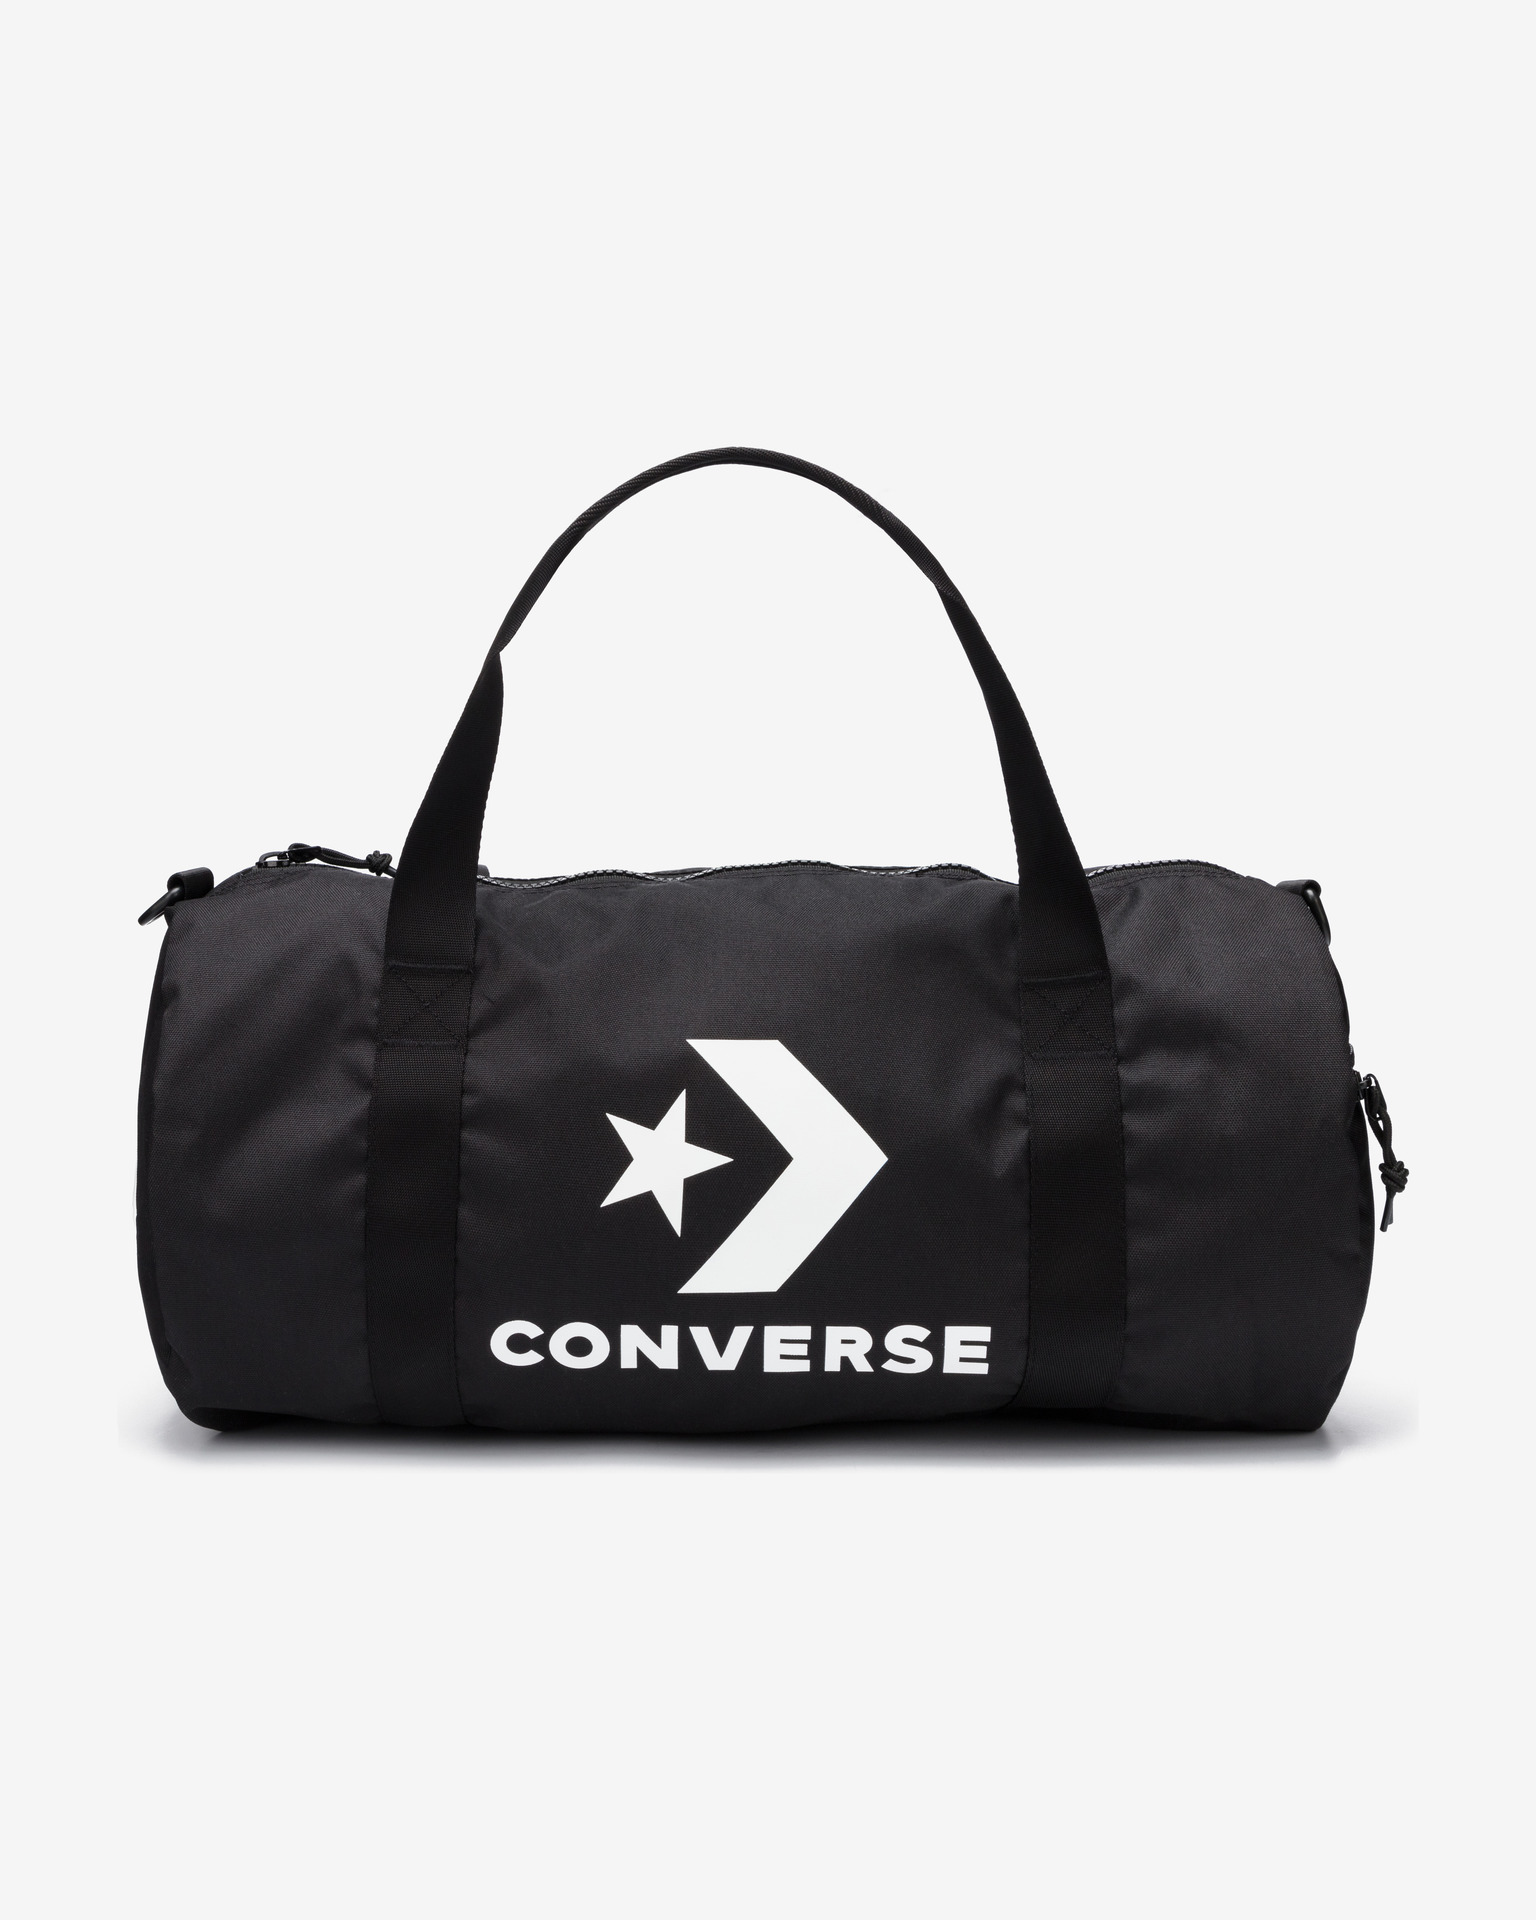 Converse Travel Bag Switzerland, SAVE - motorhomevoyager.co.uk